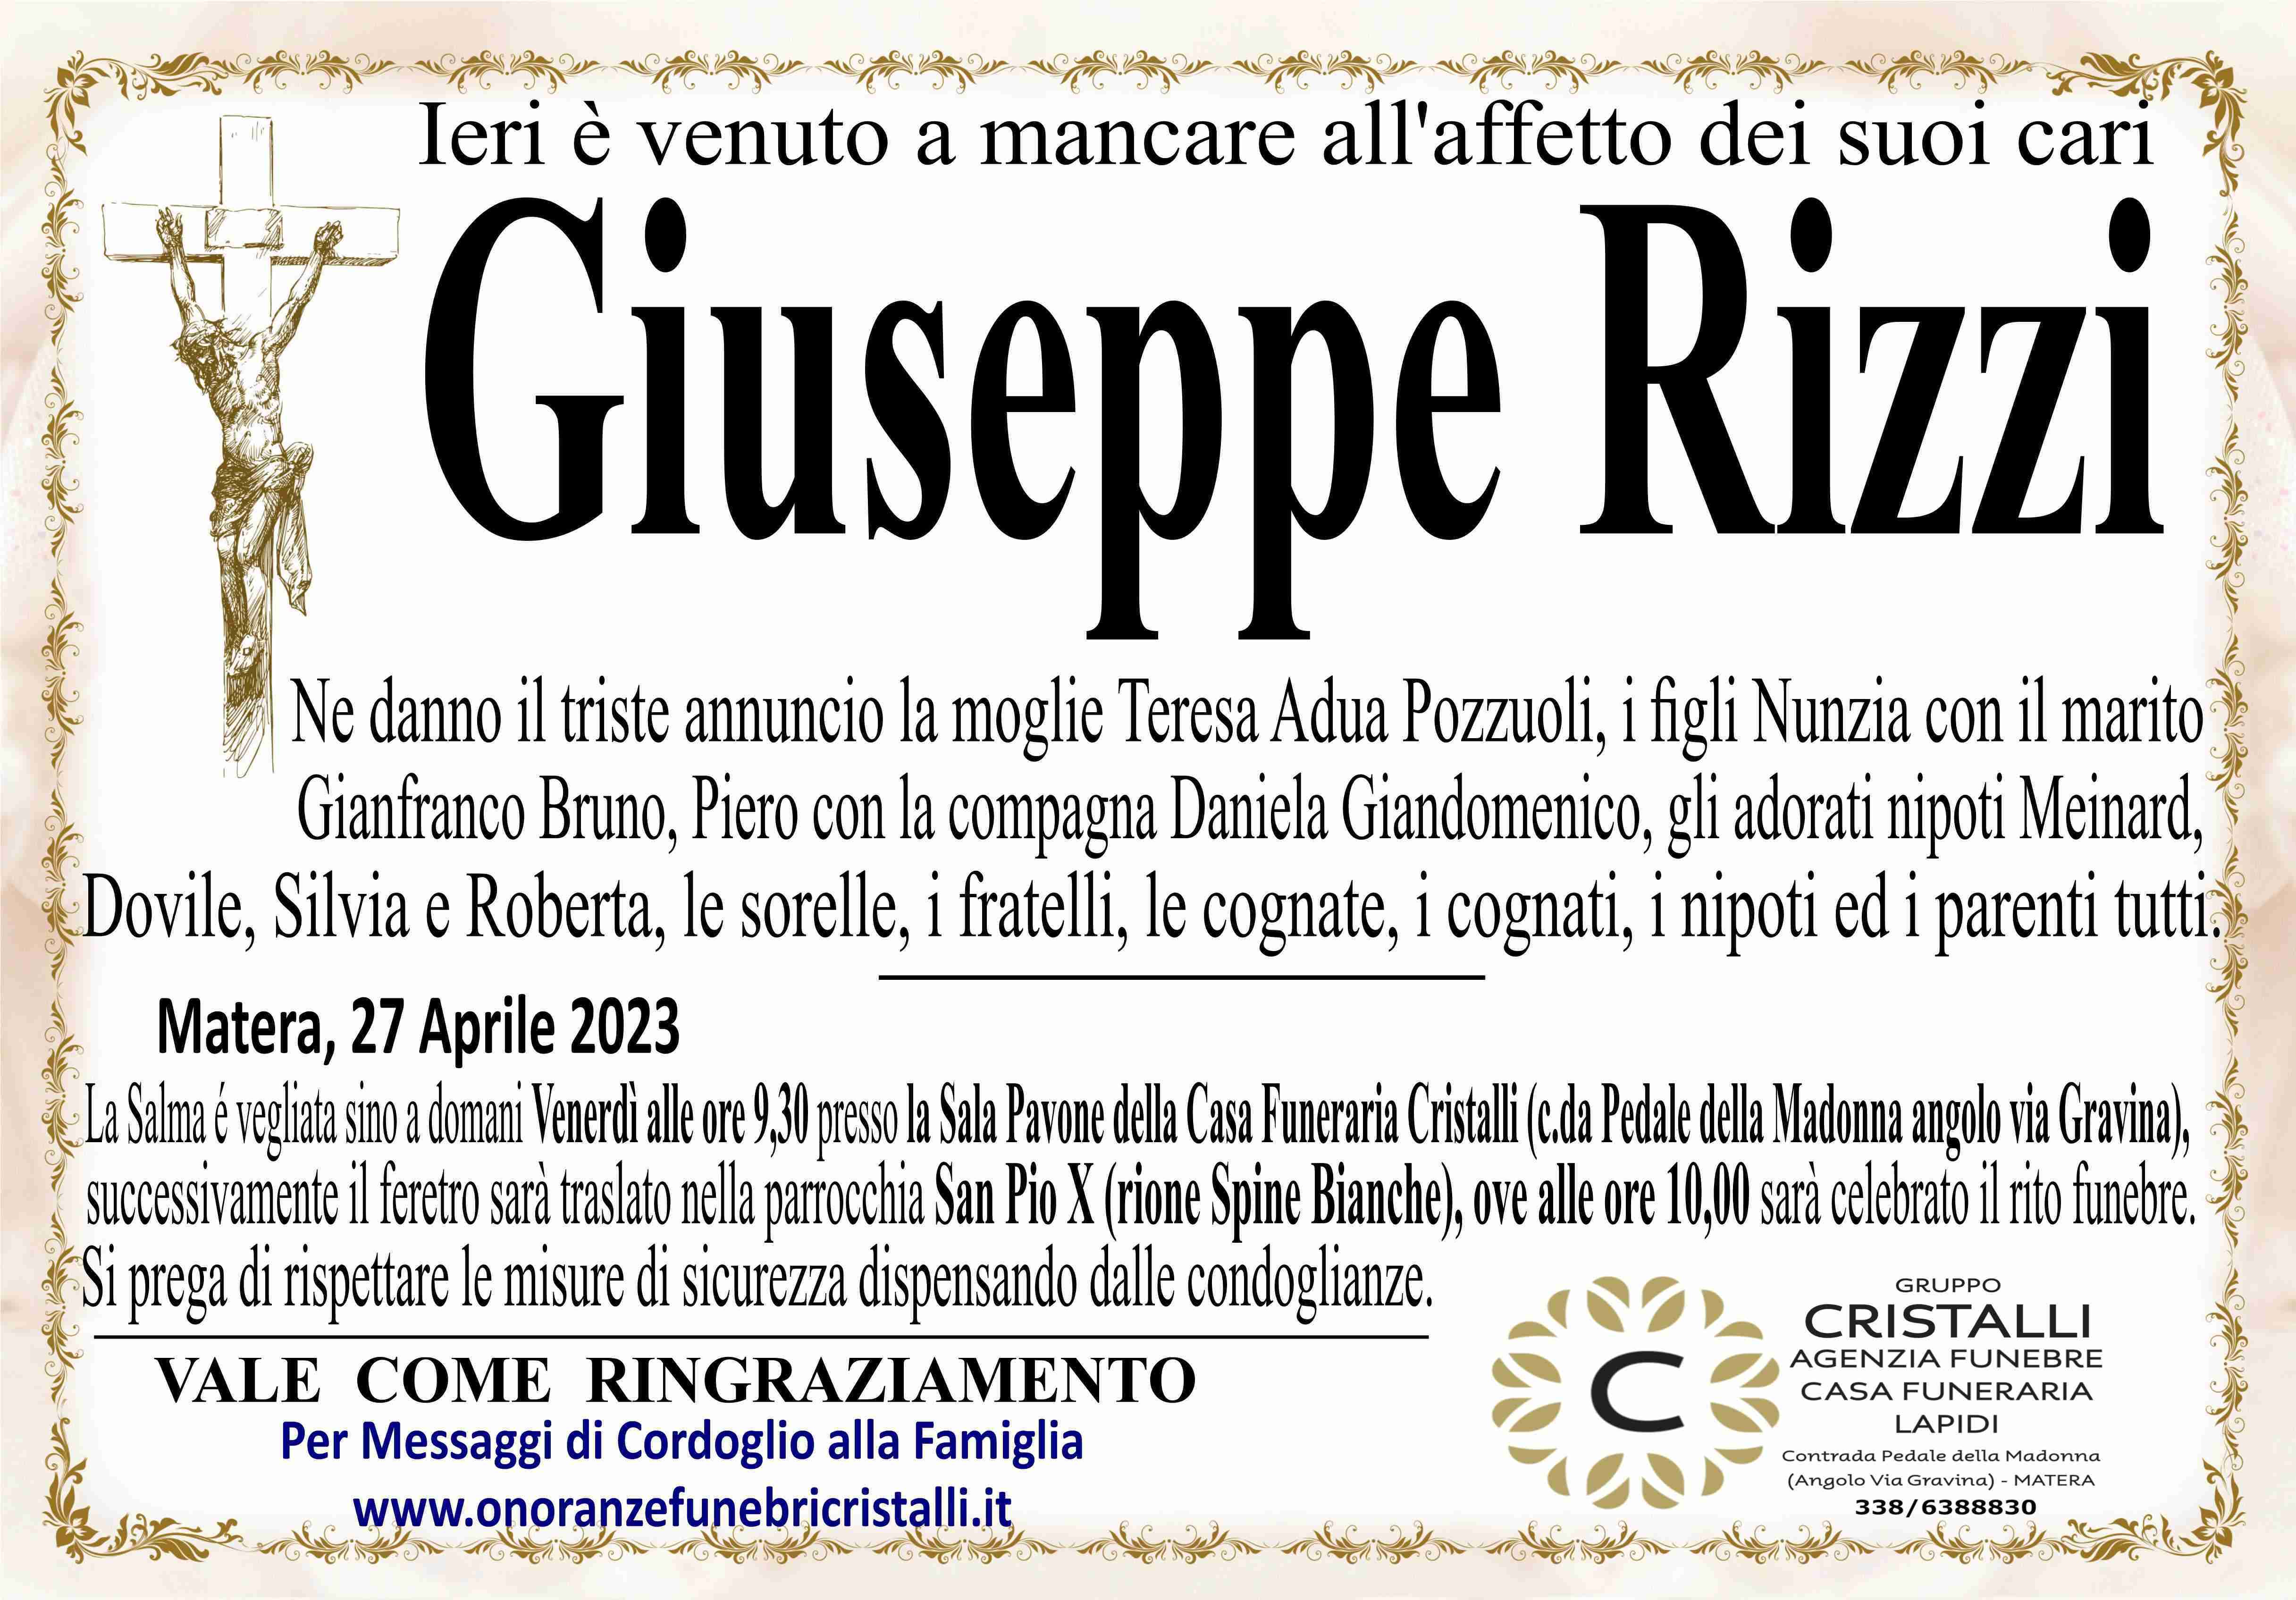 Giuseppe Rizzi